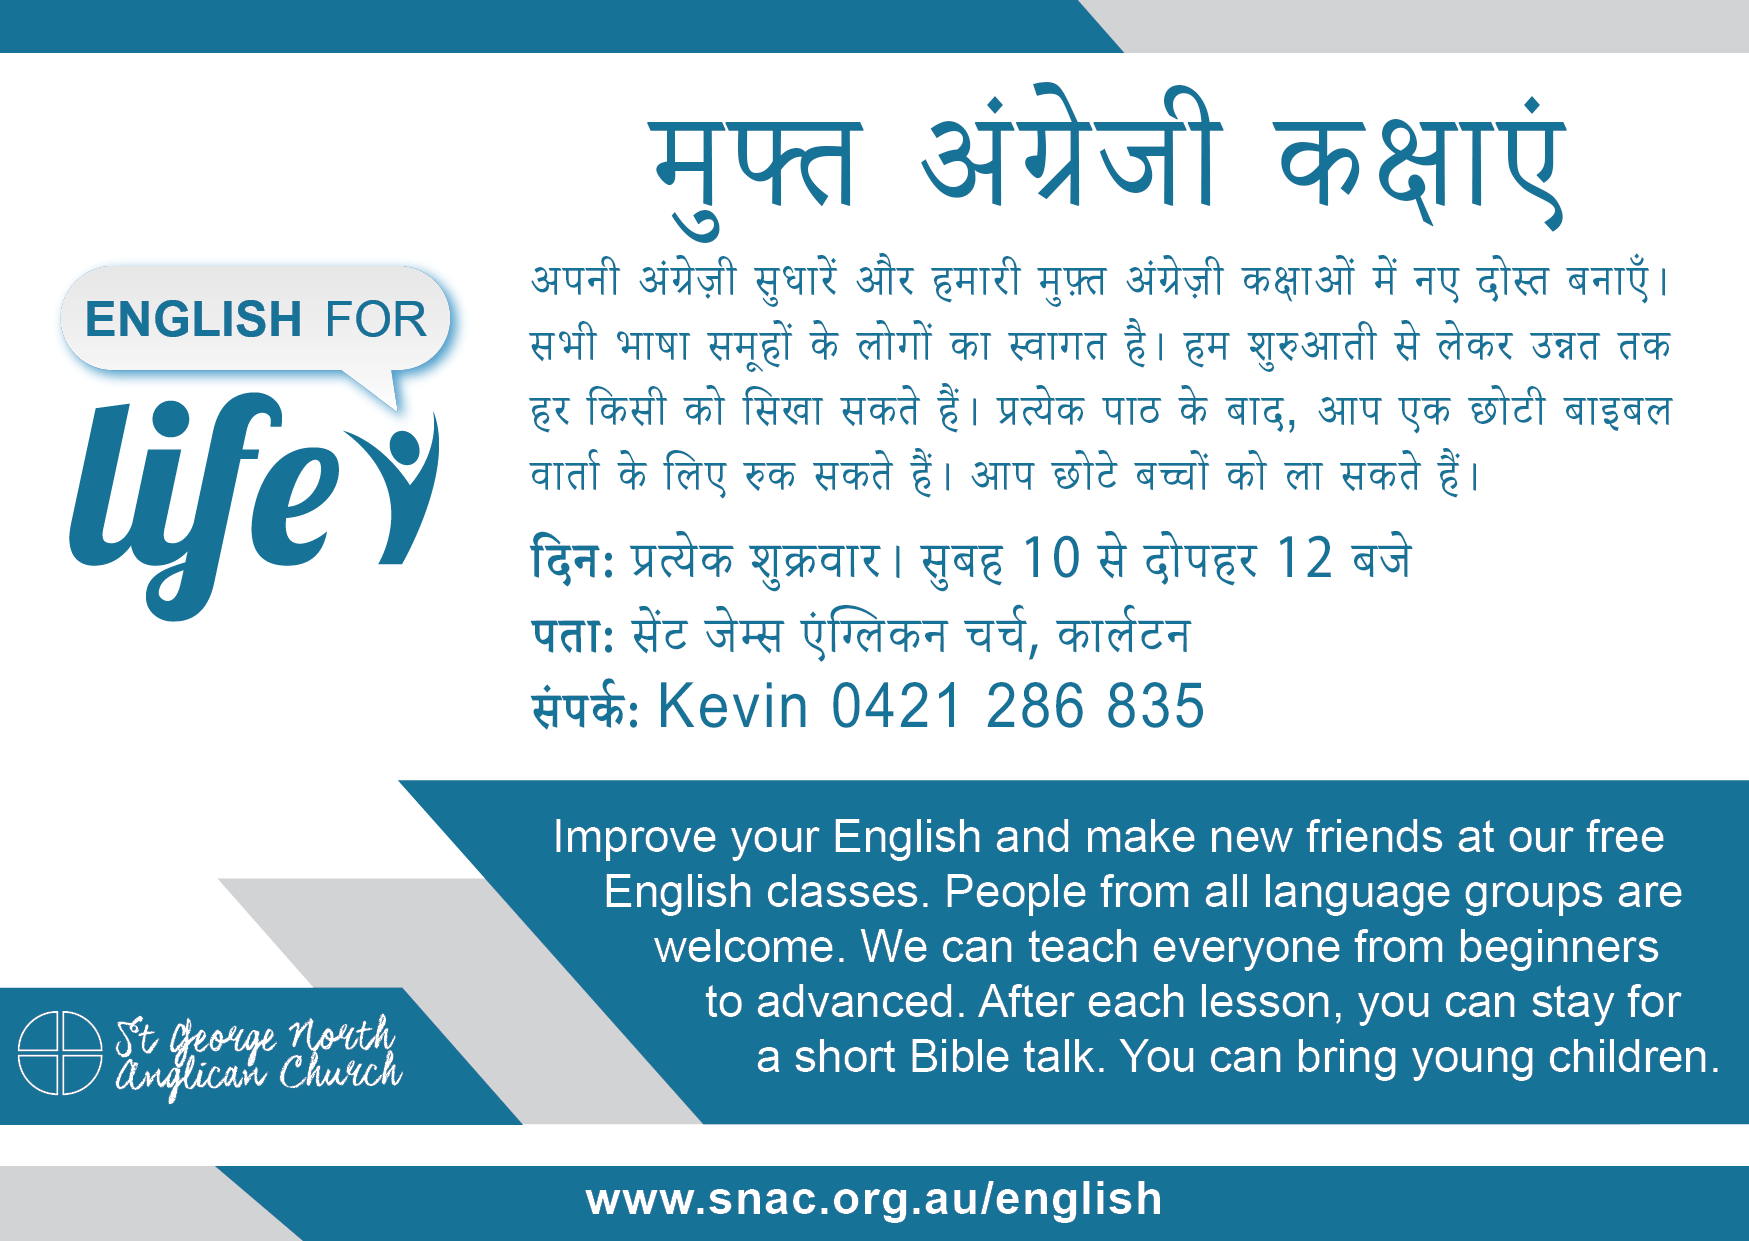 Hindi invitation